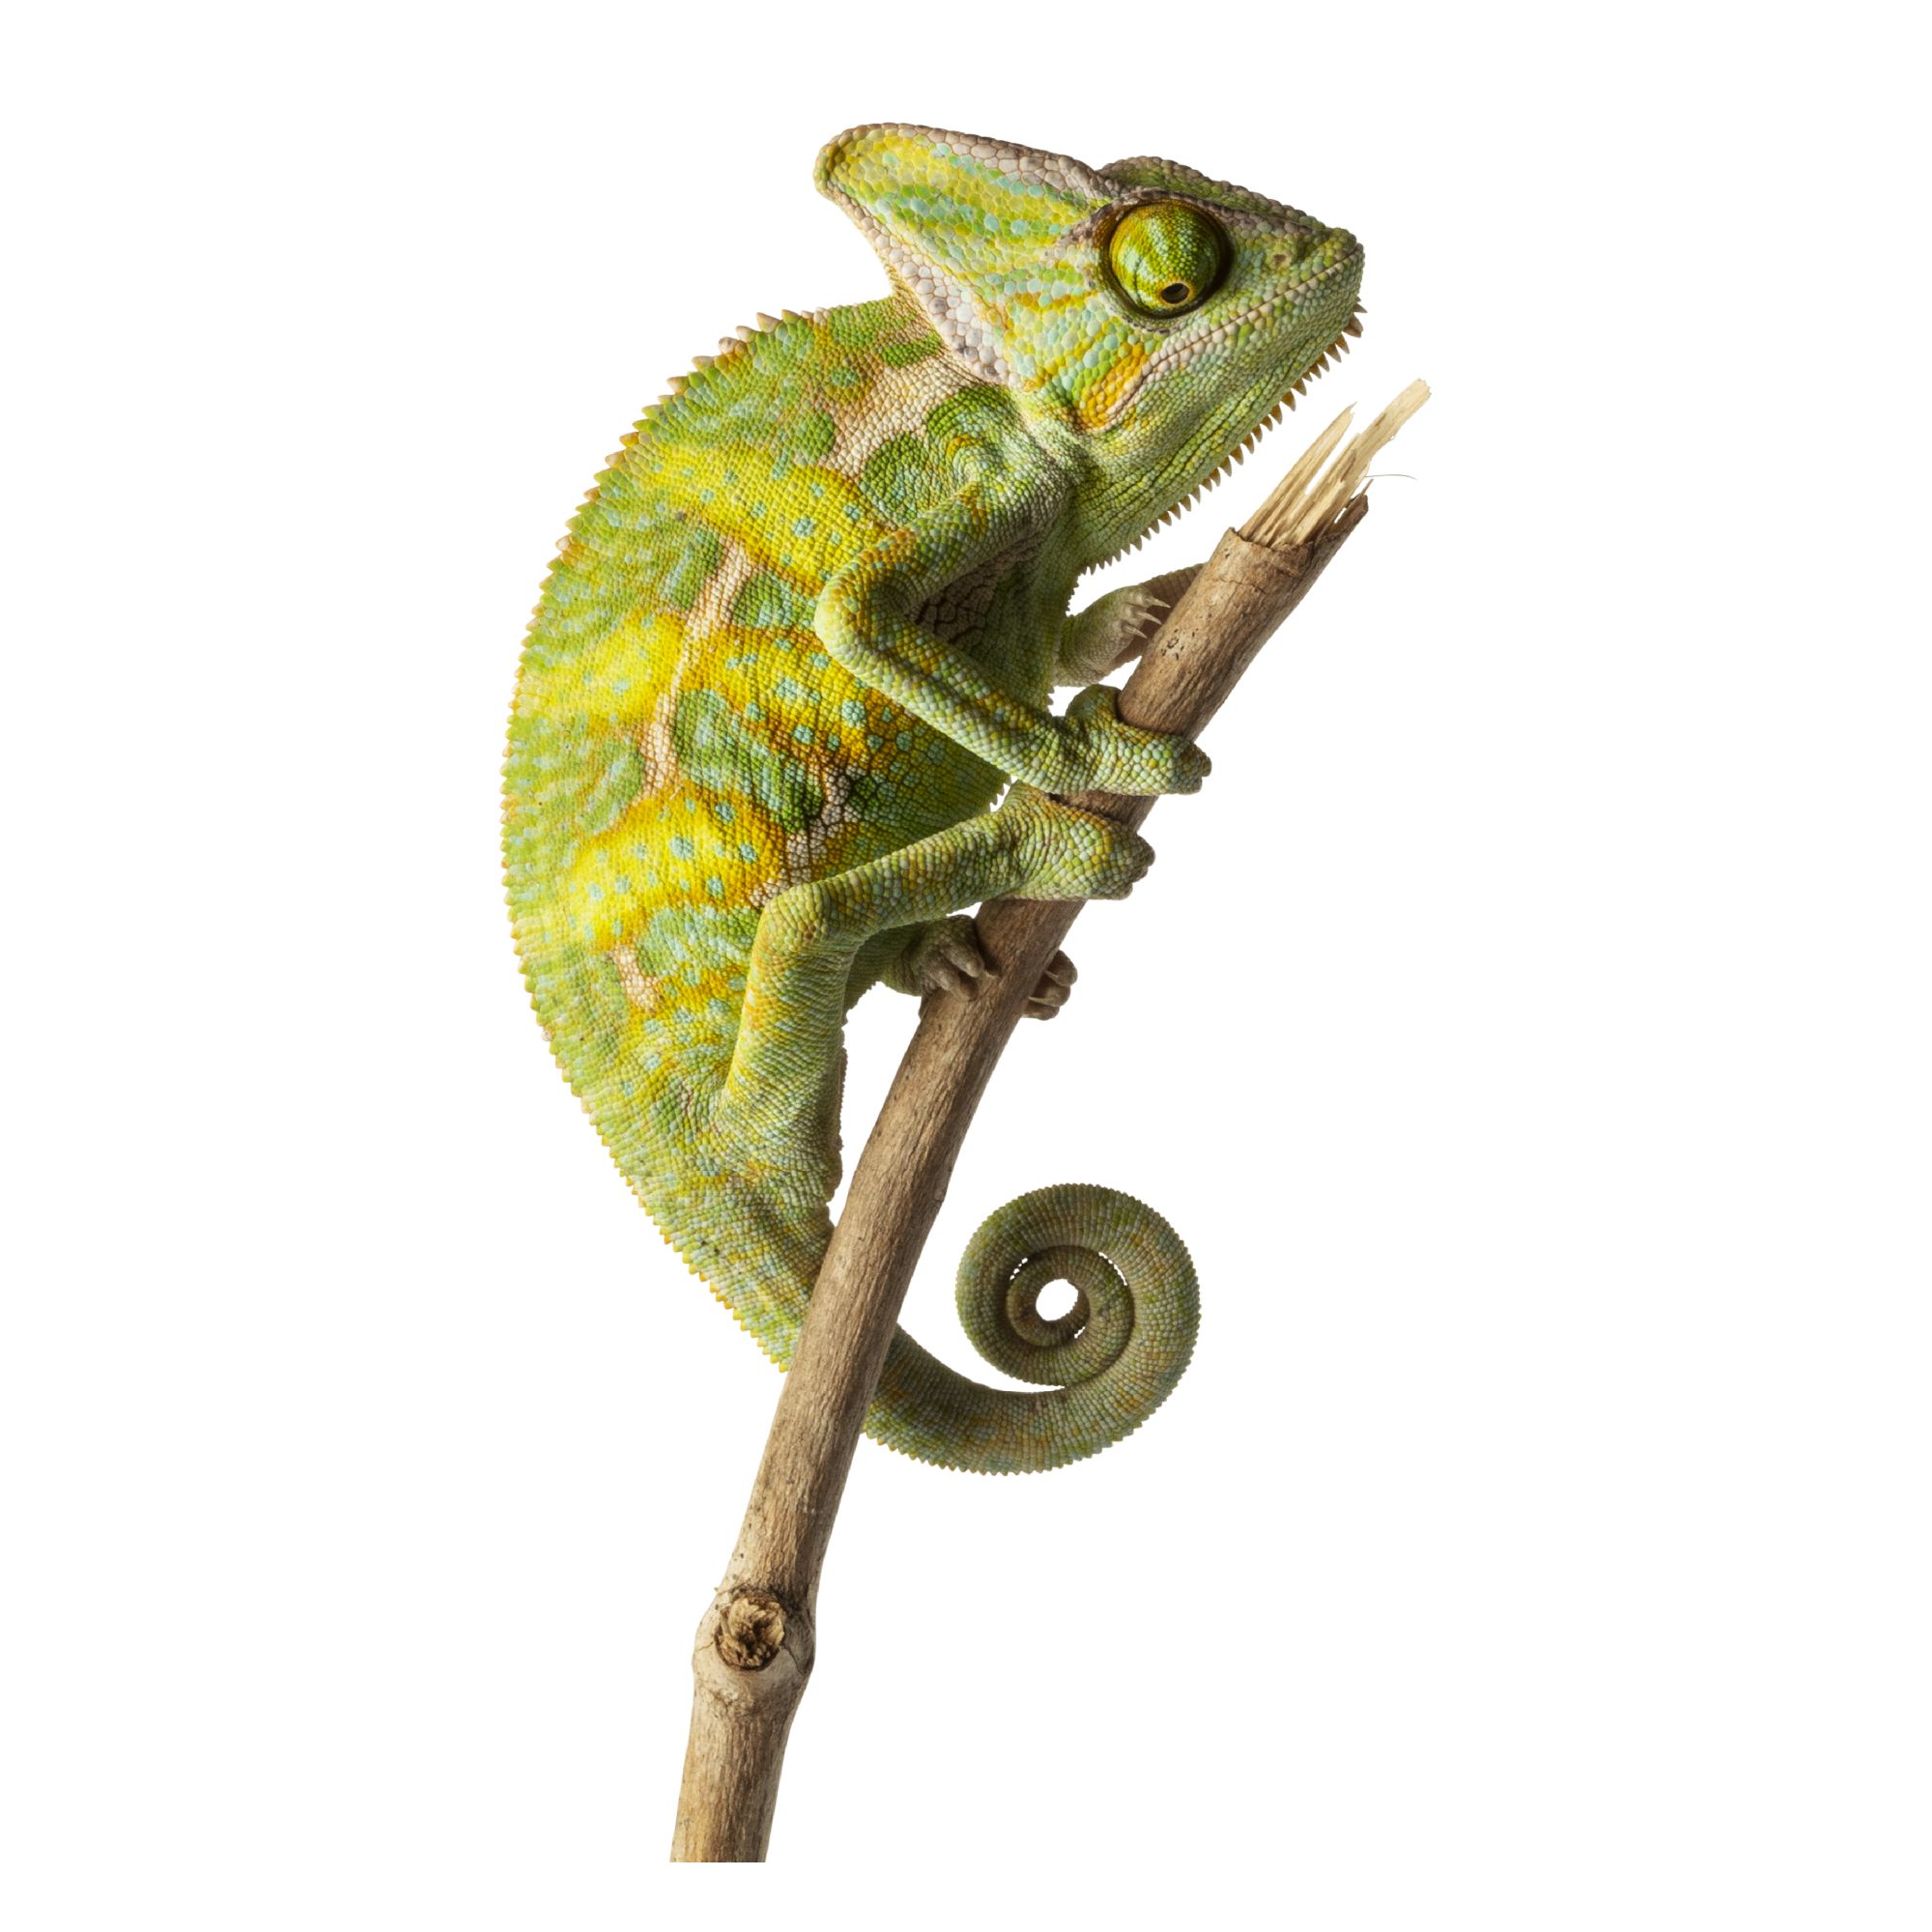 Veiled Chameleon for Sale - Live Reptiles